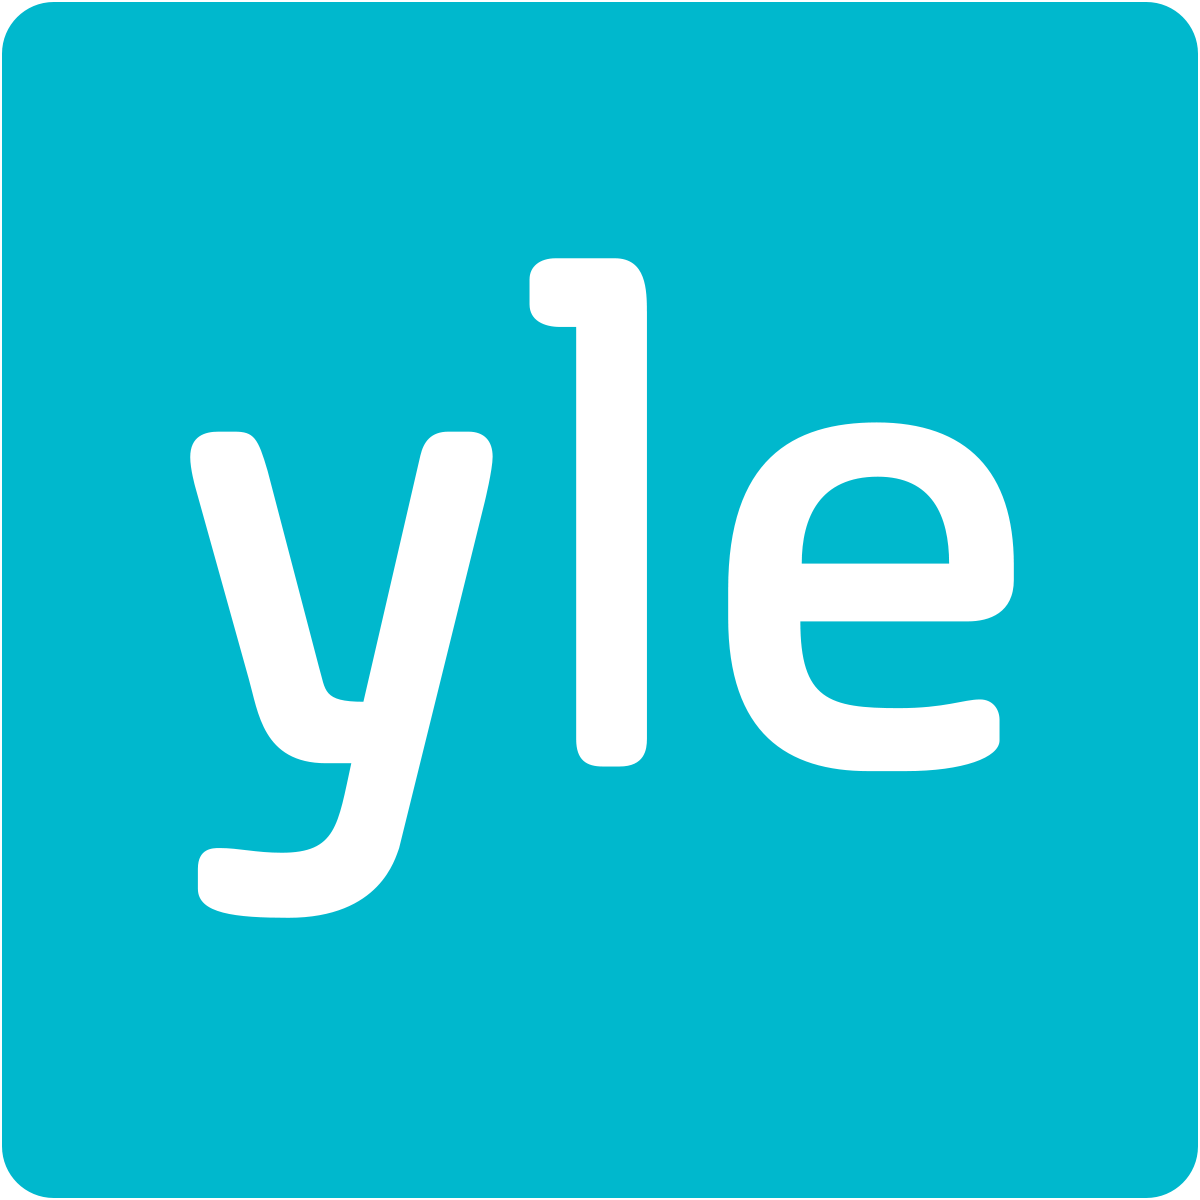 Yle tv logo